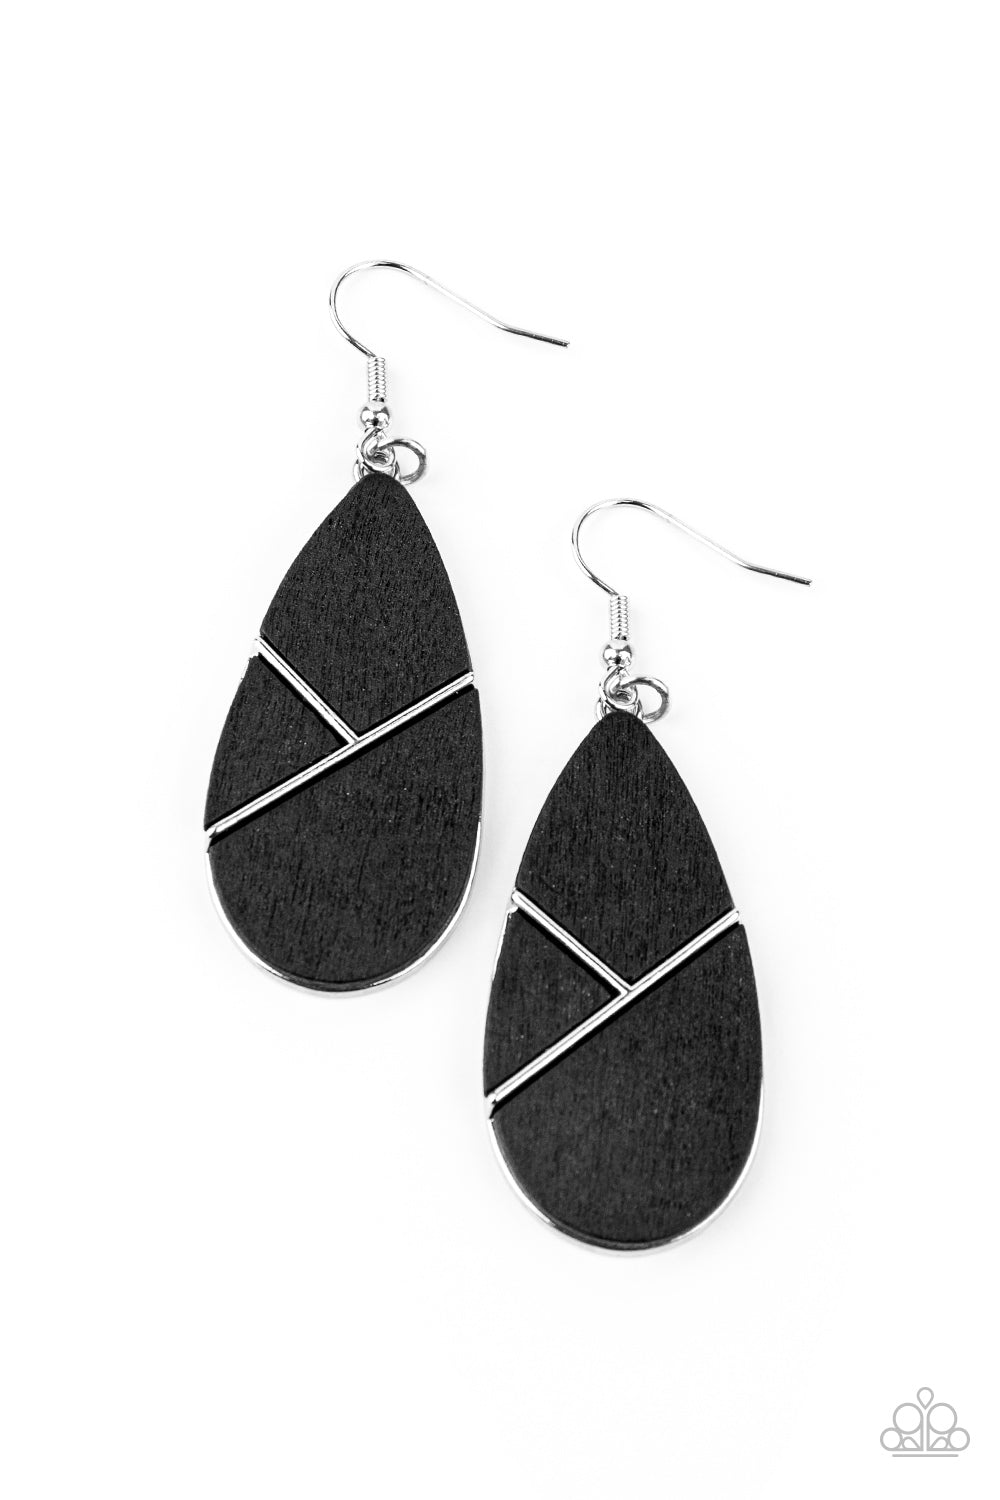 Sequoia Forest - black - Paparazzi earrings